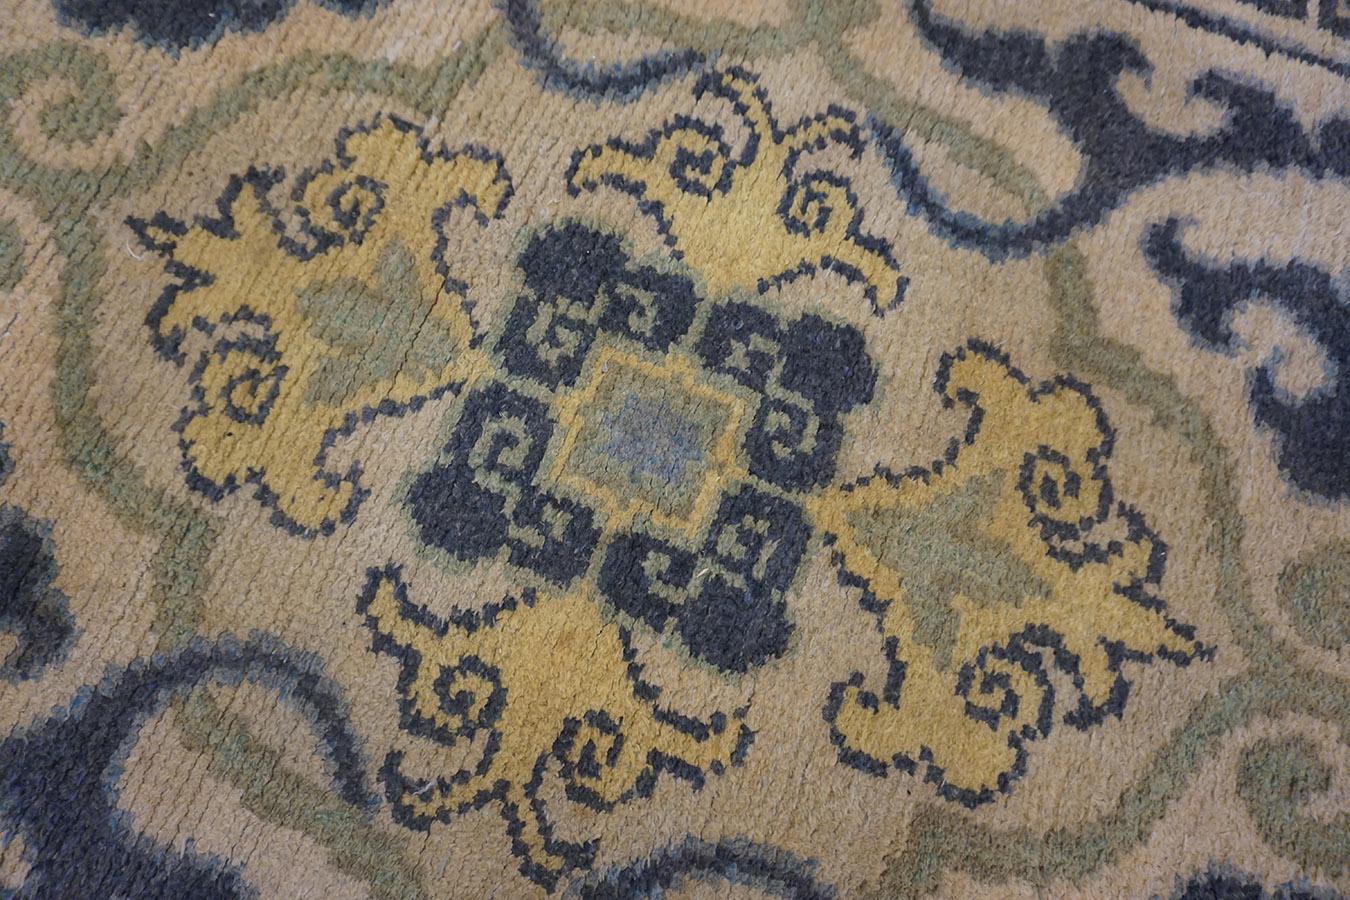 Early 20th Century Japanese Cotton Nabeshima Dantsu Carpet (3' x 5'10